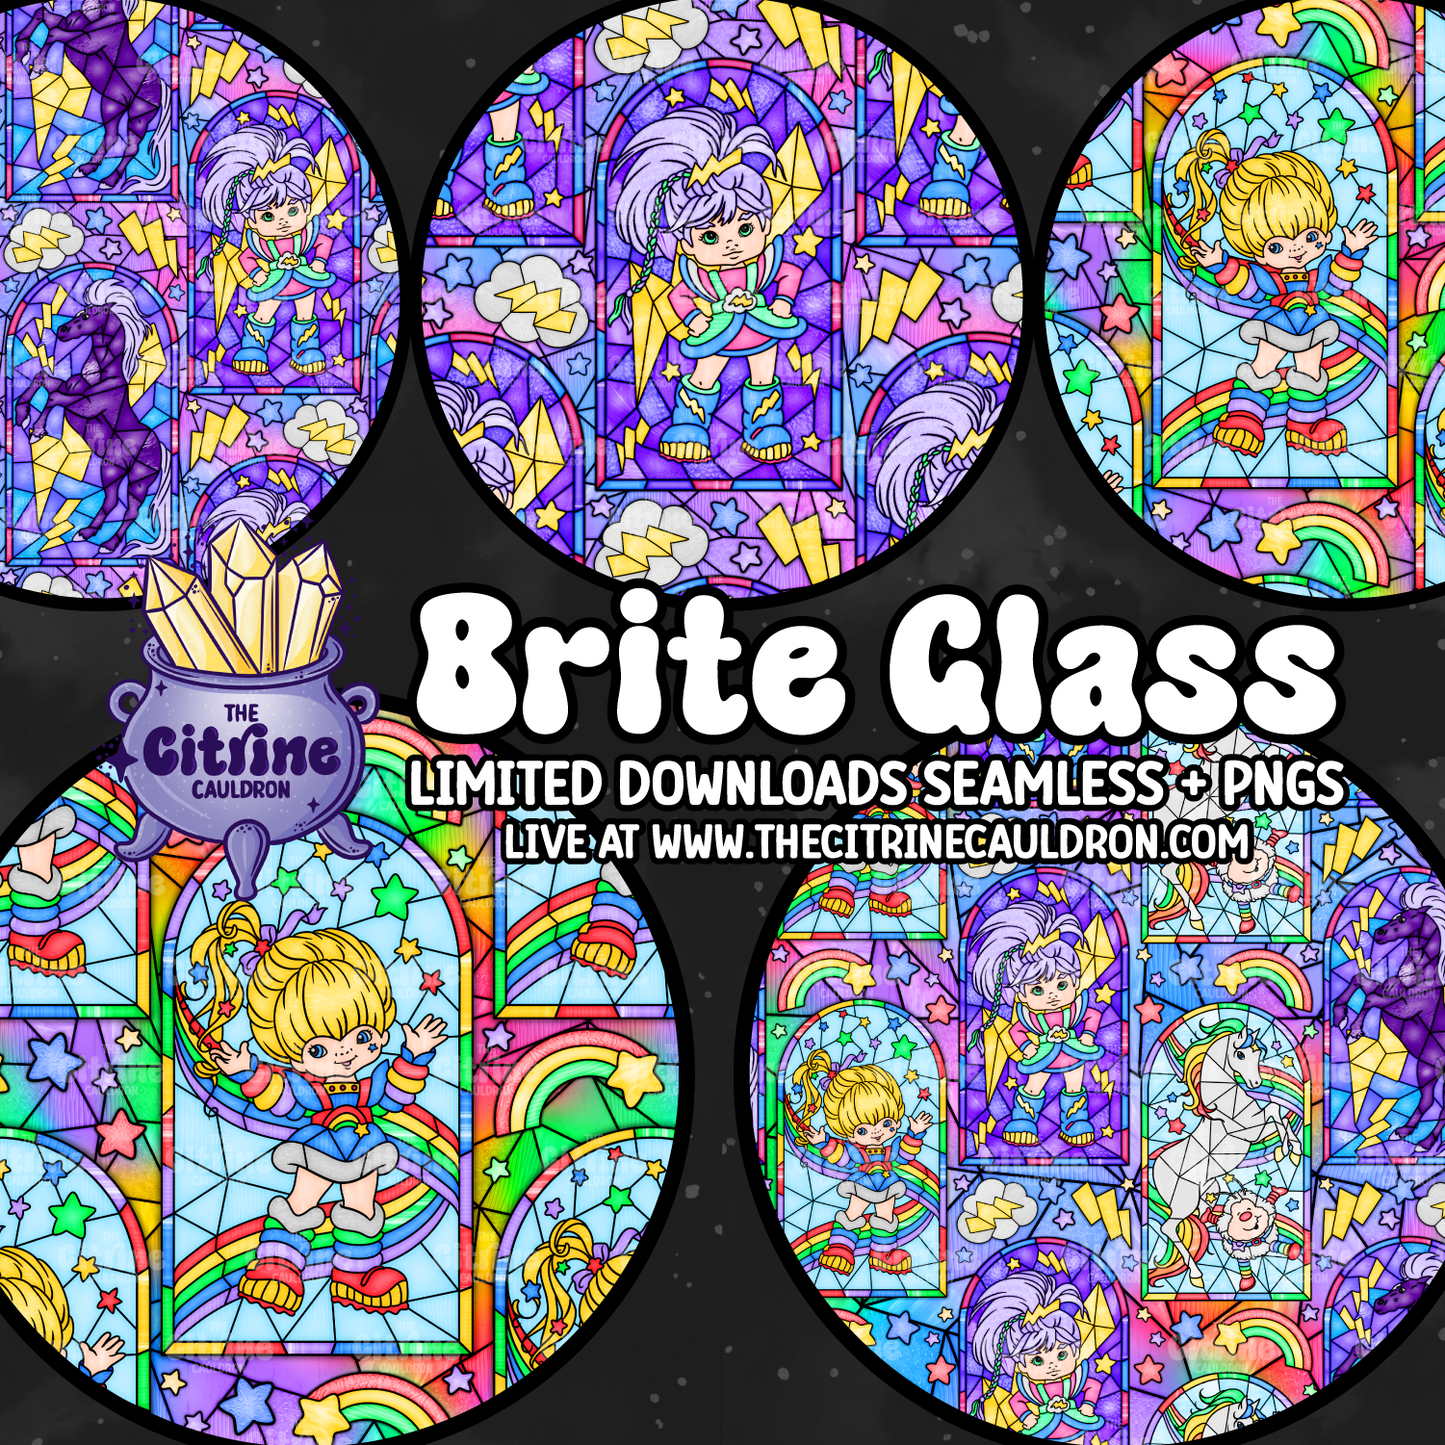 Brite Glass - Seamless